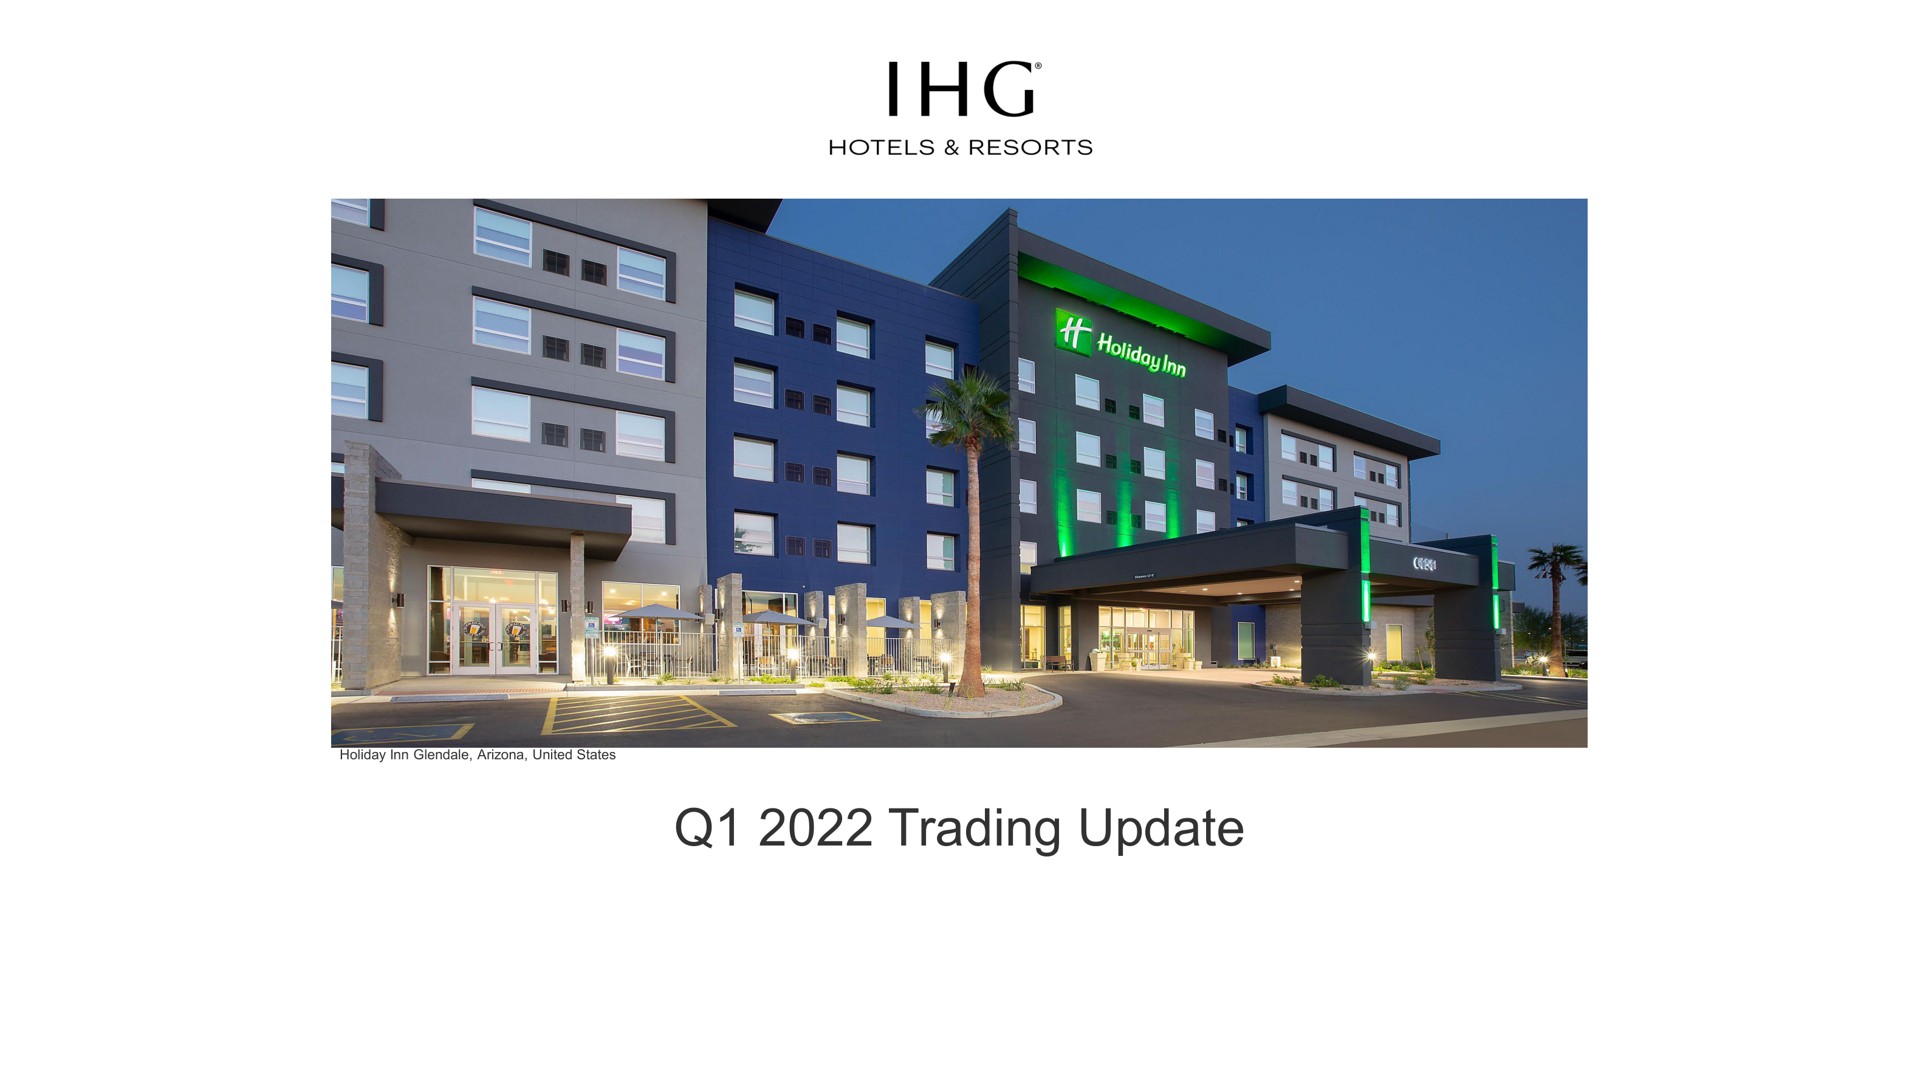 trading update | IHG Hotels